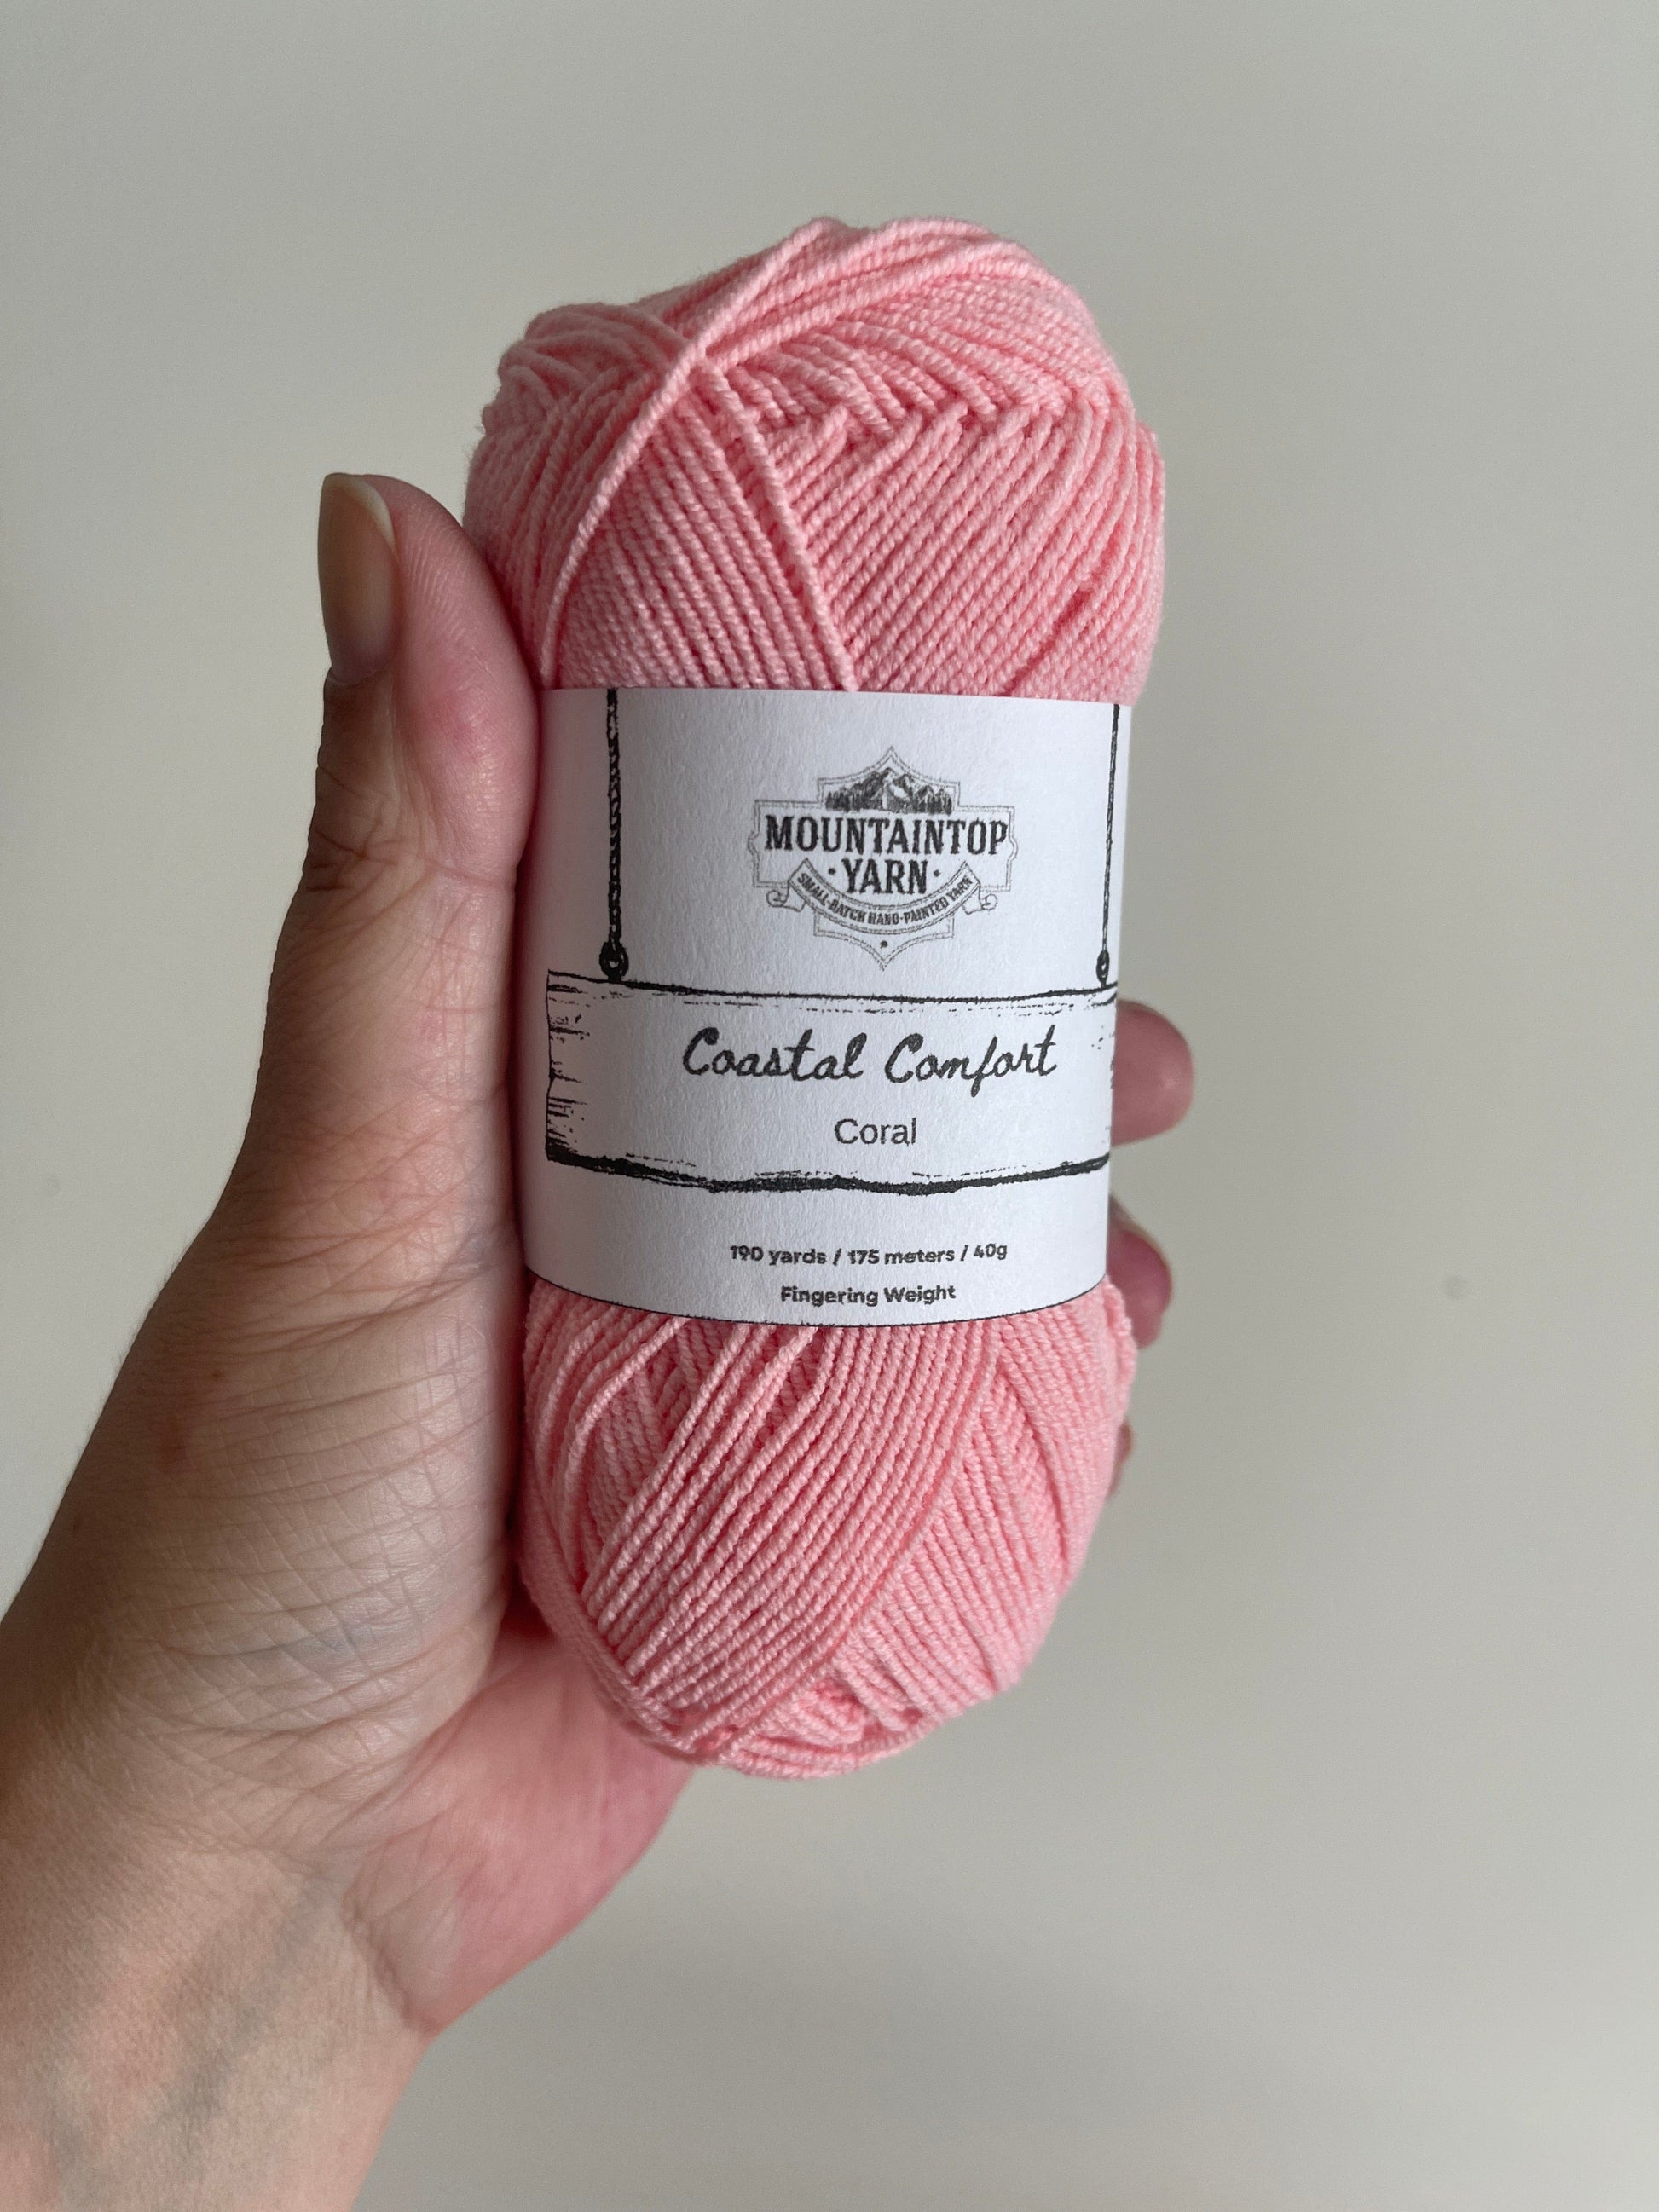 Mountaintop Yarn Coral Coastal Comfort - Cotton and Acrylic Blend Yarn Yarn